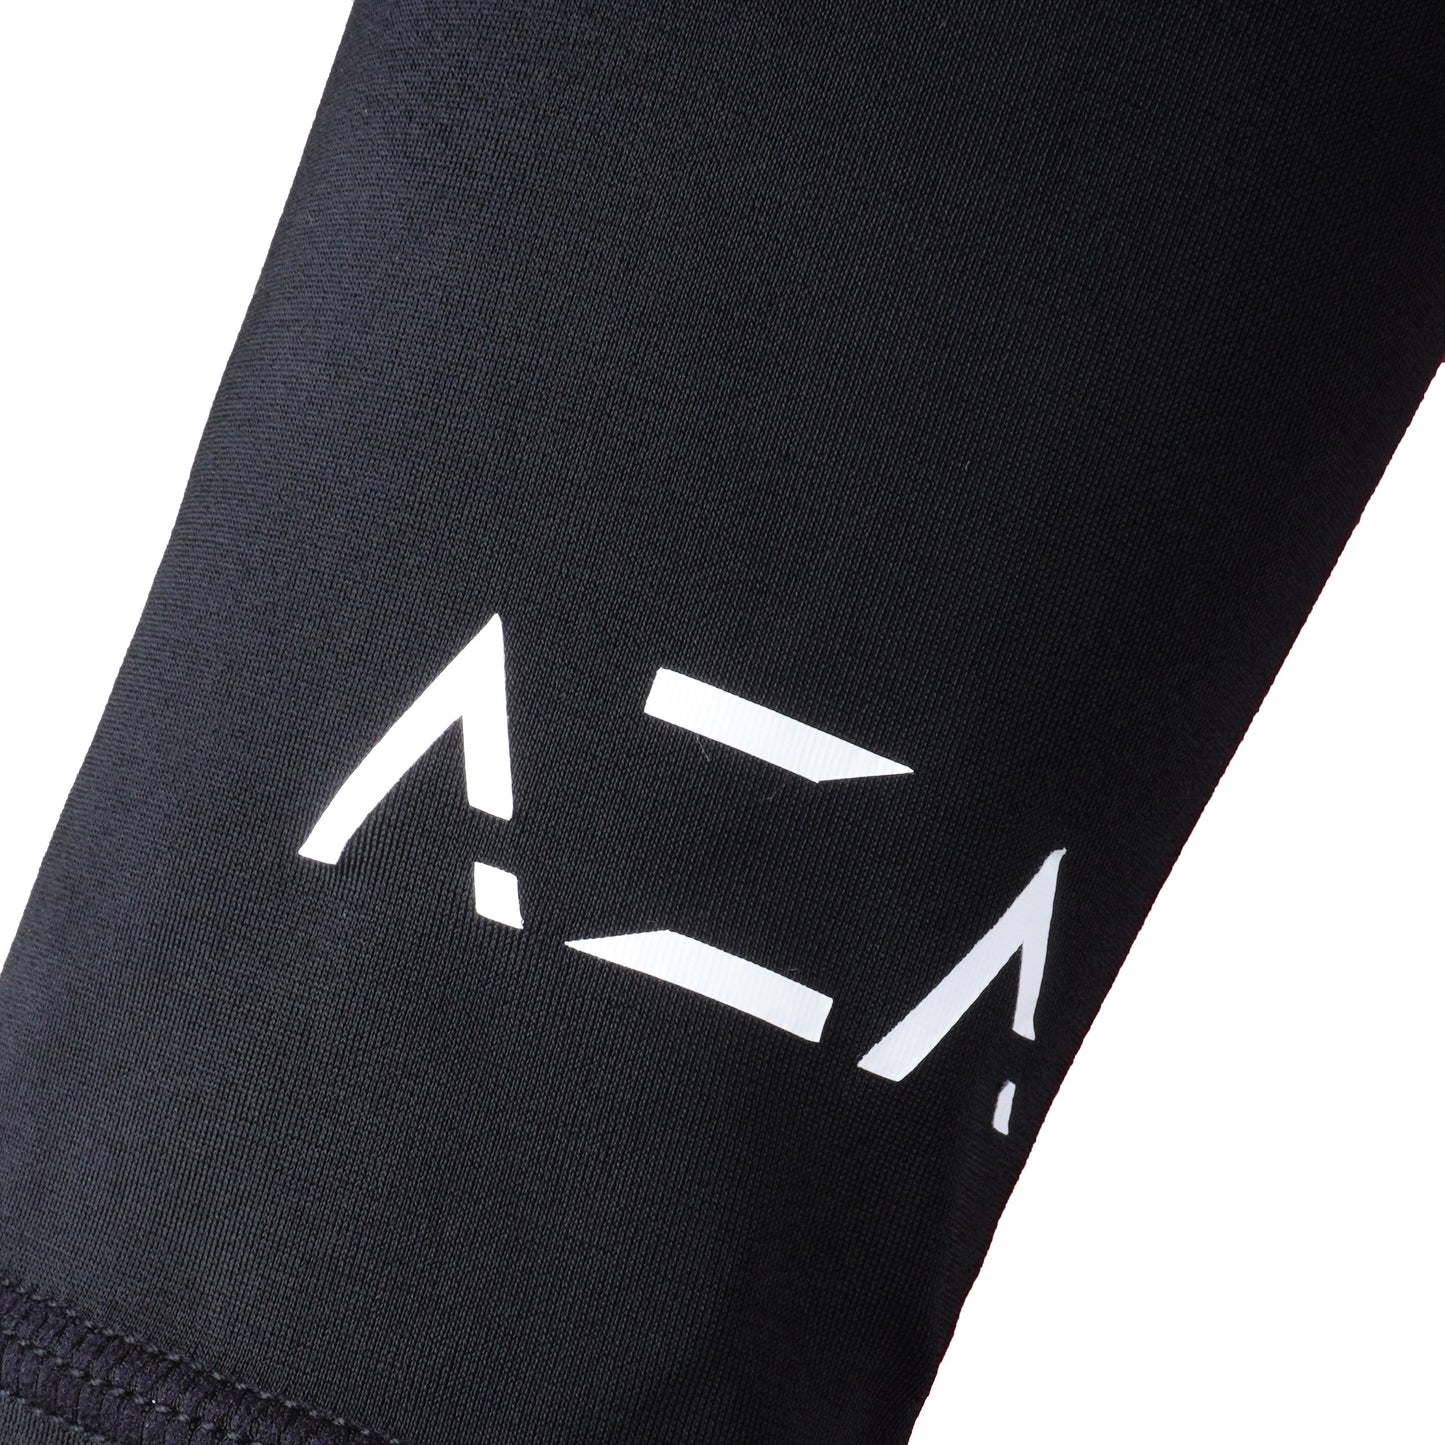 AZA Arm Sleeve Pad (Black)